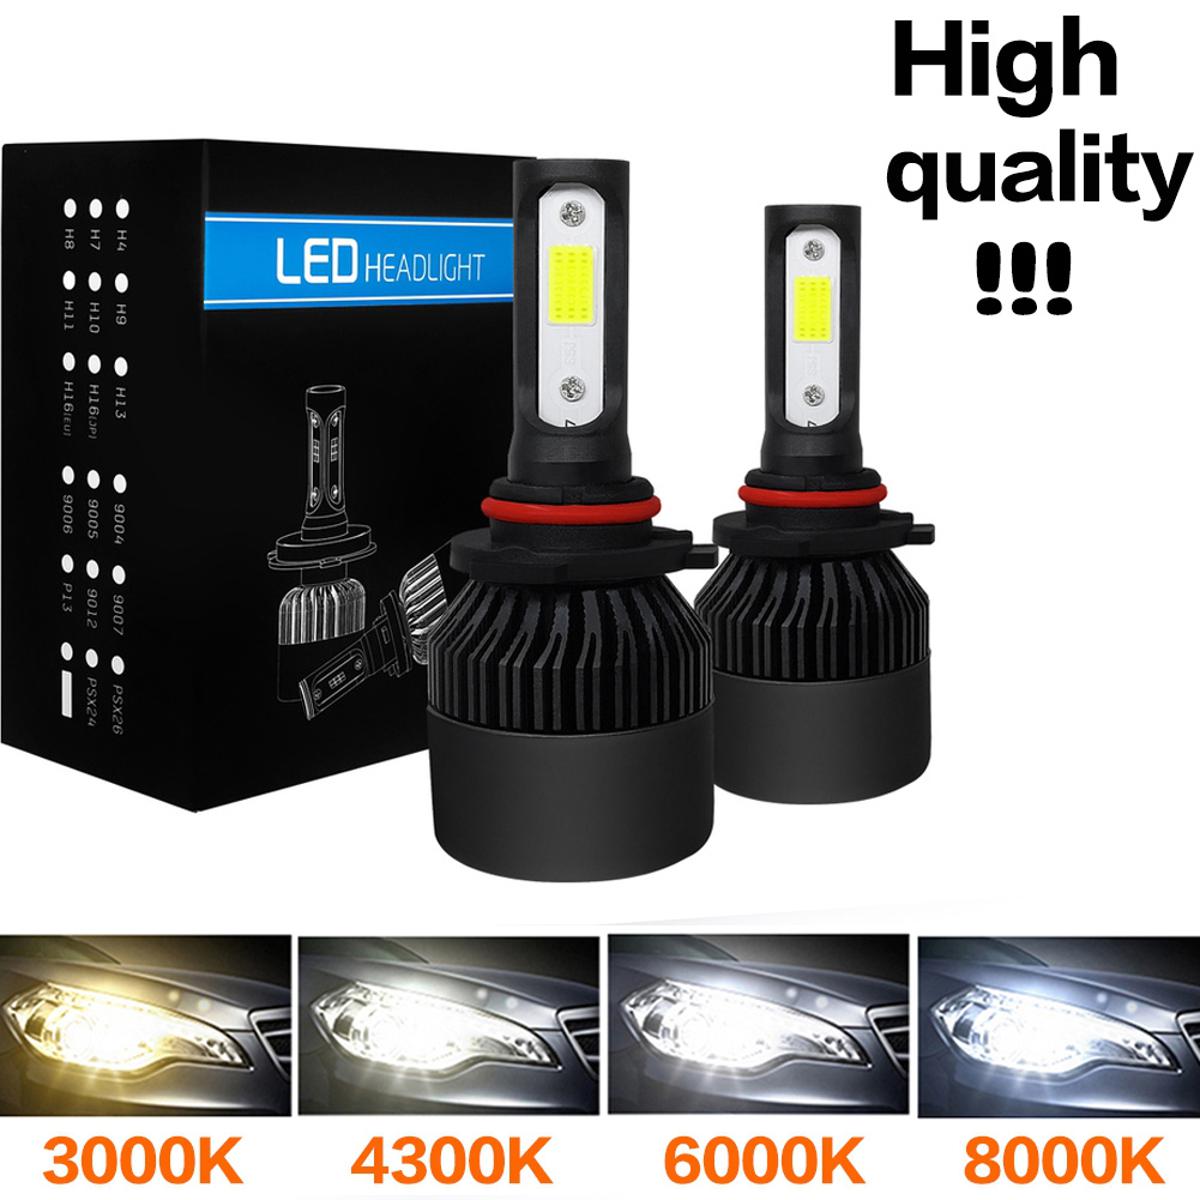 Quality upgrade】1 Pair LED H4 8000K Car Headlight 10000LM Auto